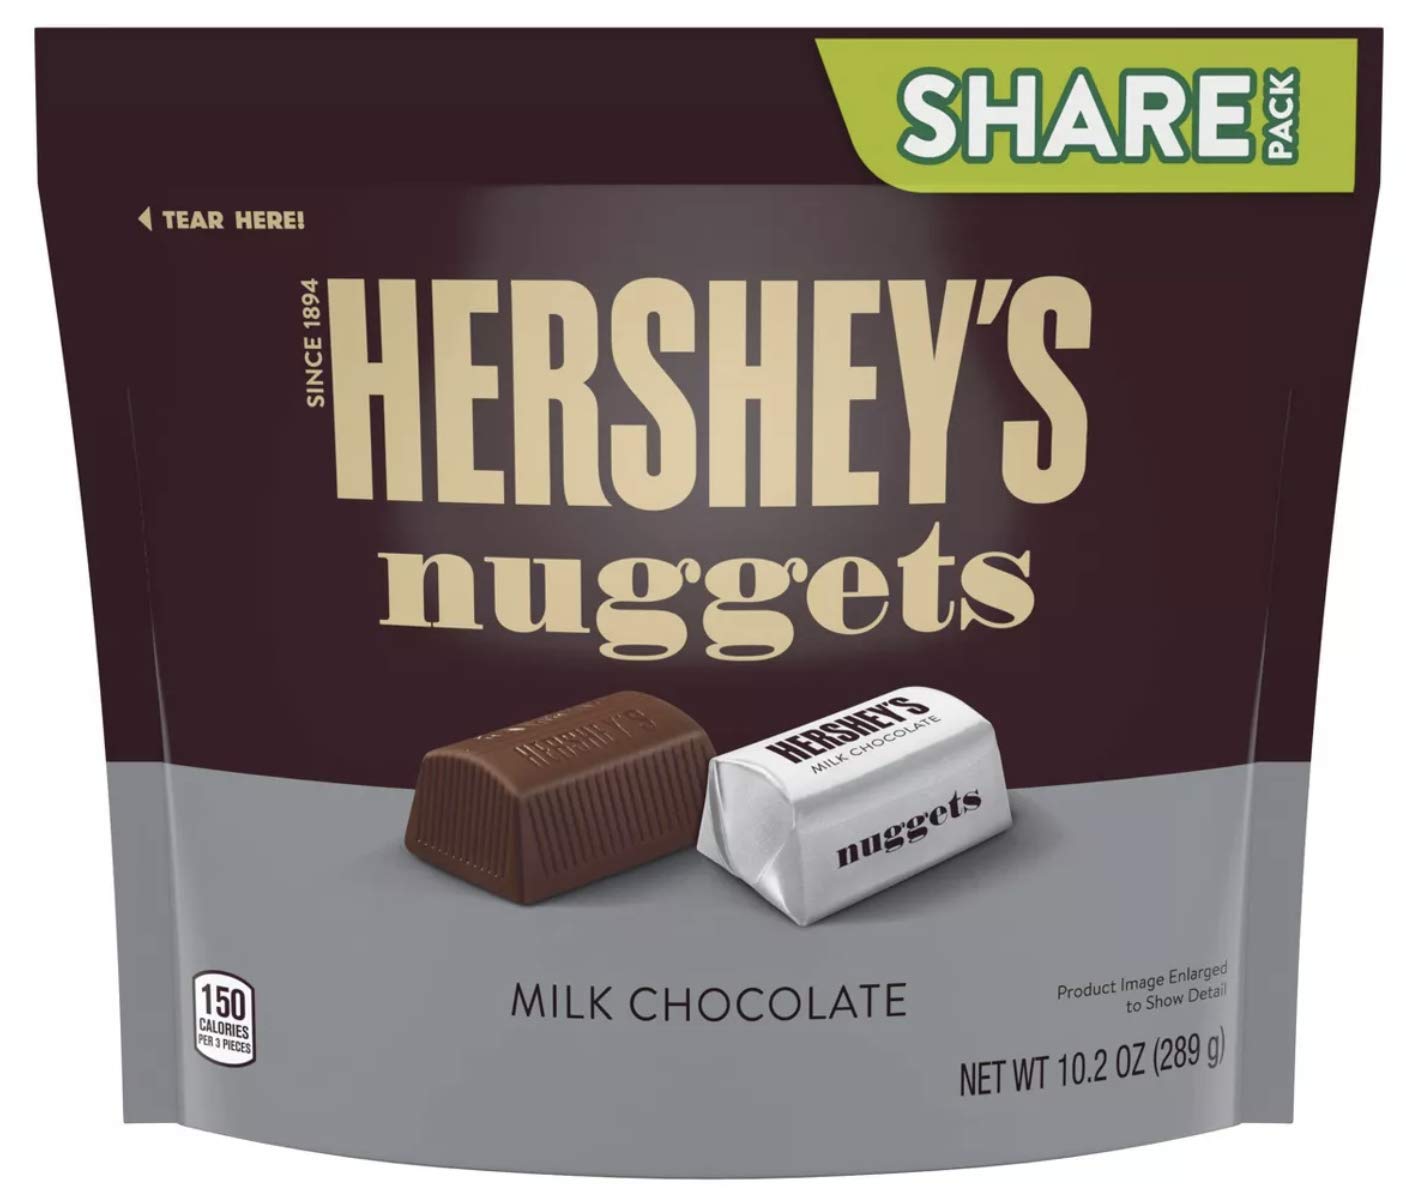 TÚI 289g KẸO SOCOLA SỮA Hershey s Nuggets Share Size Milk Chocolates 10.2